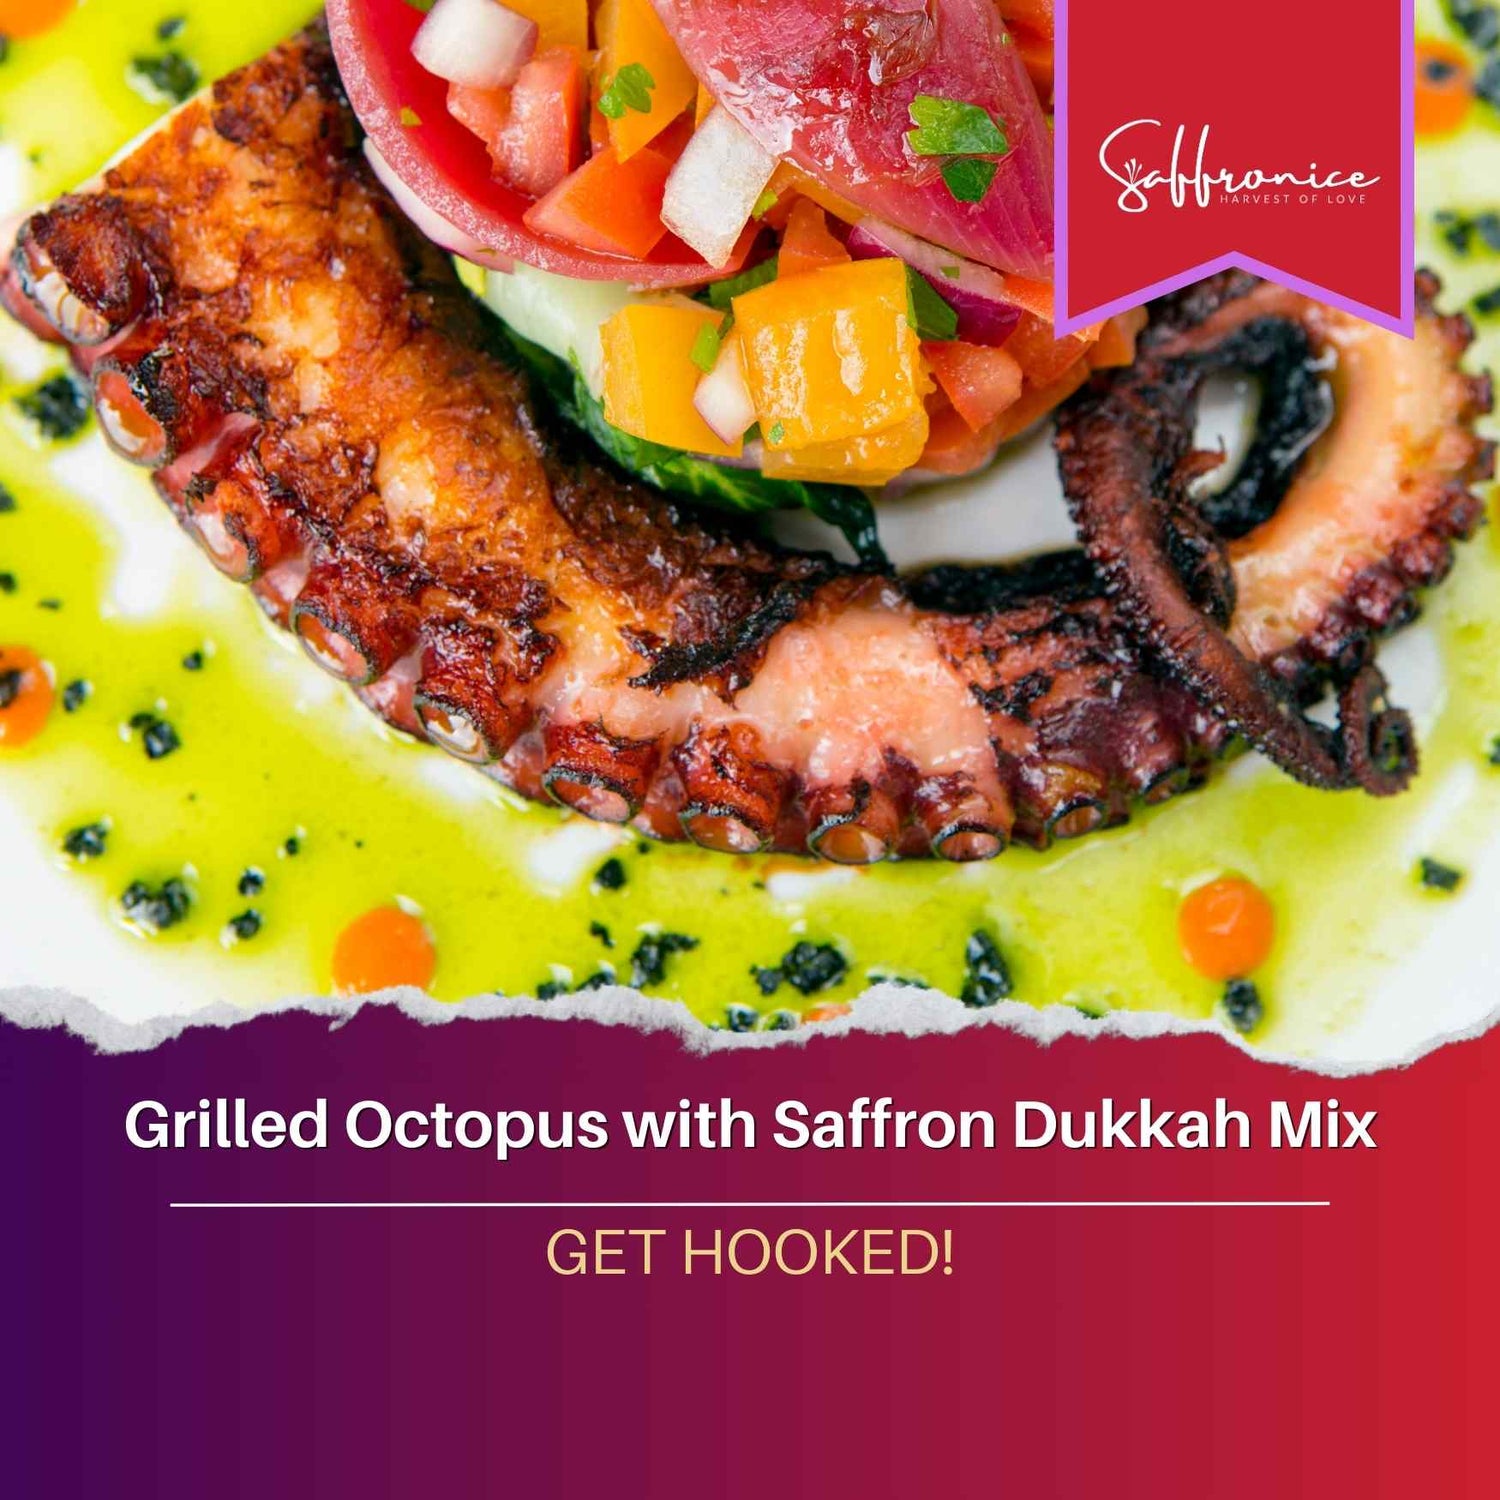 Grilled Octopus with Saffron Almond Dukkah